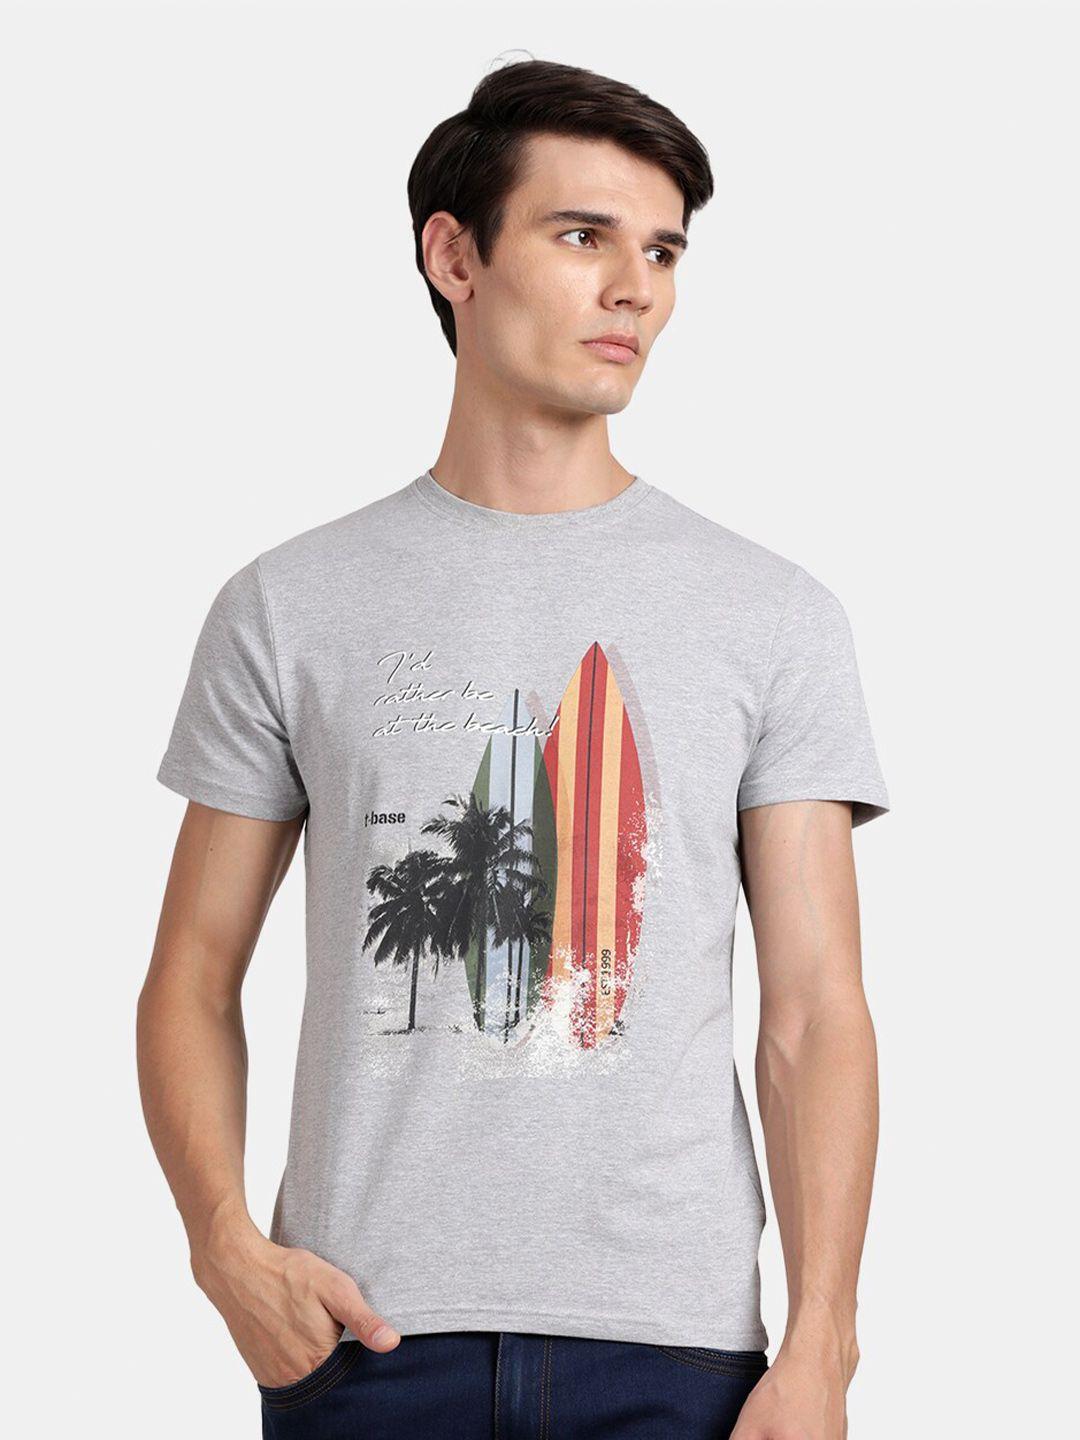 t-base graphic printed cotton lycra t-shirt